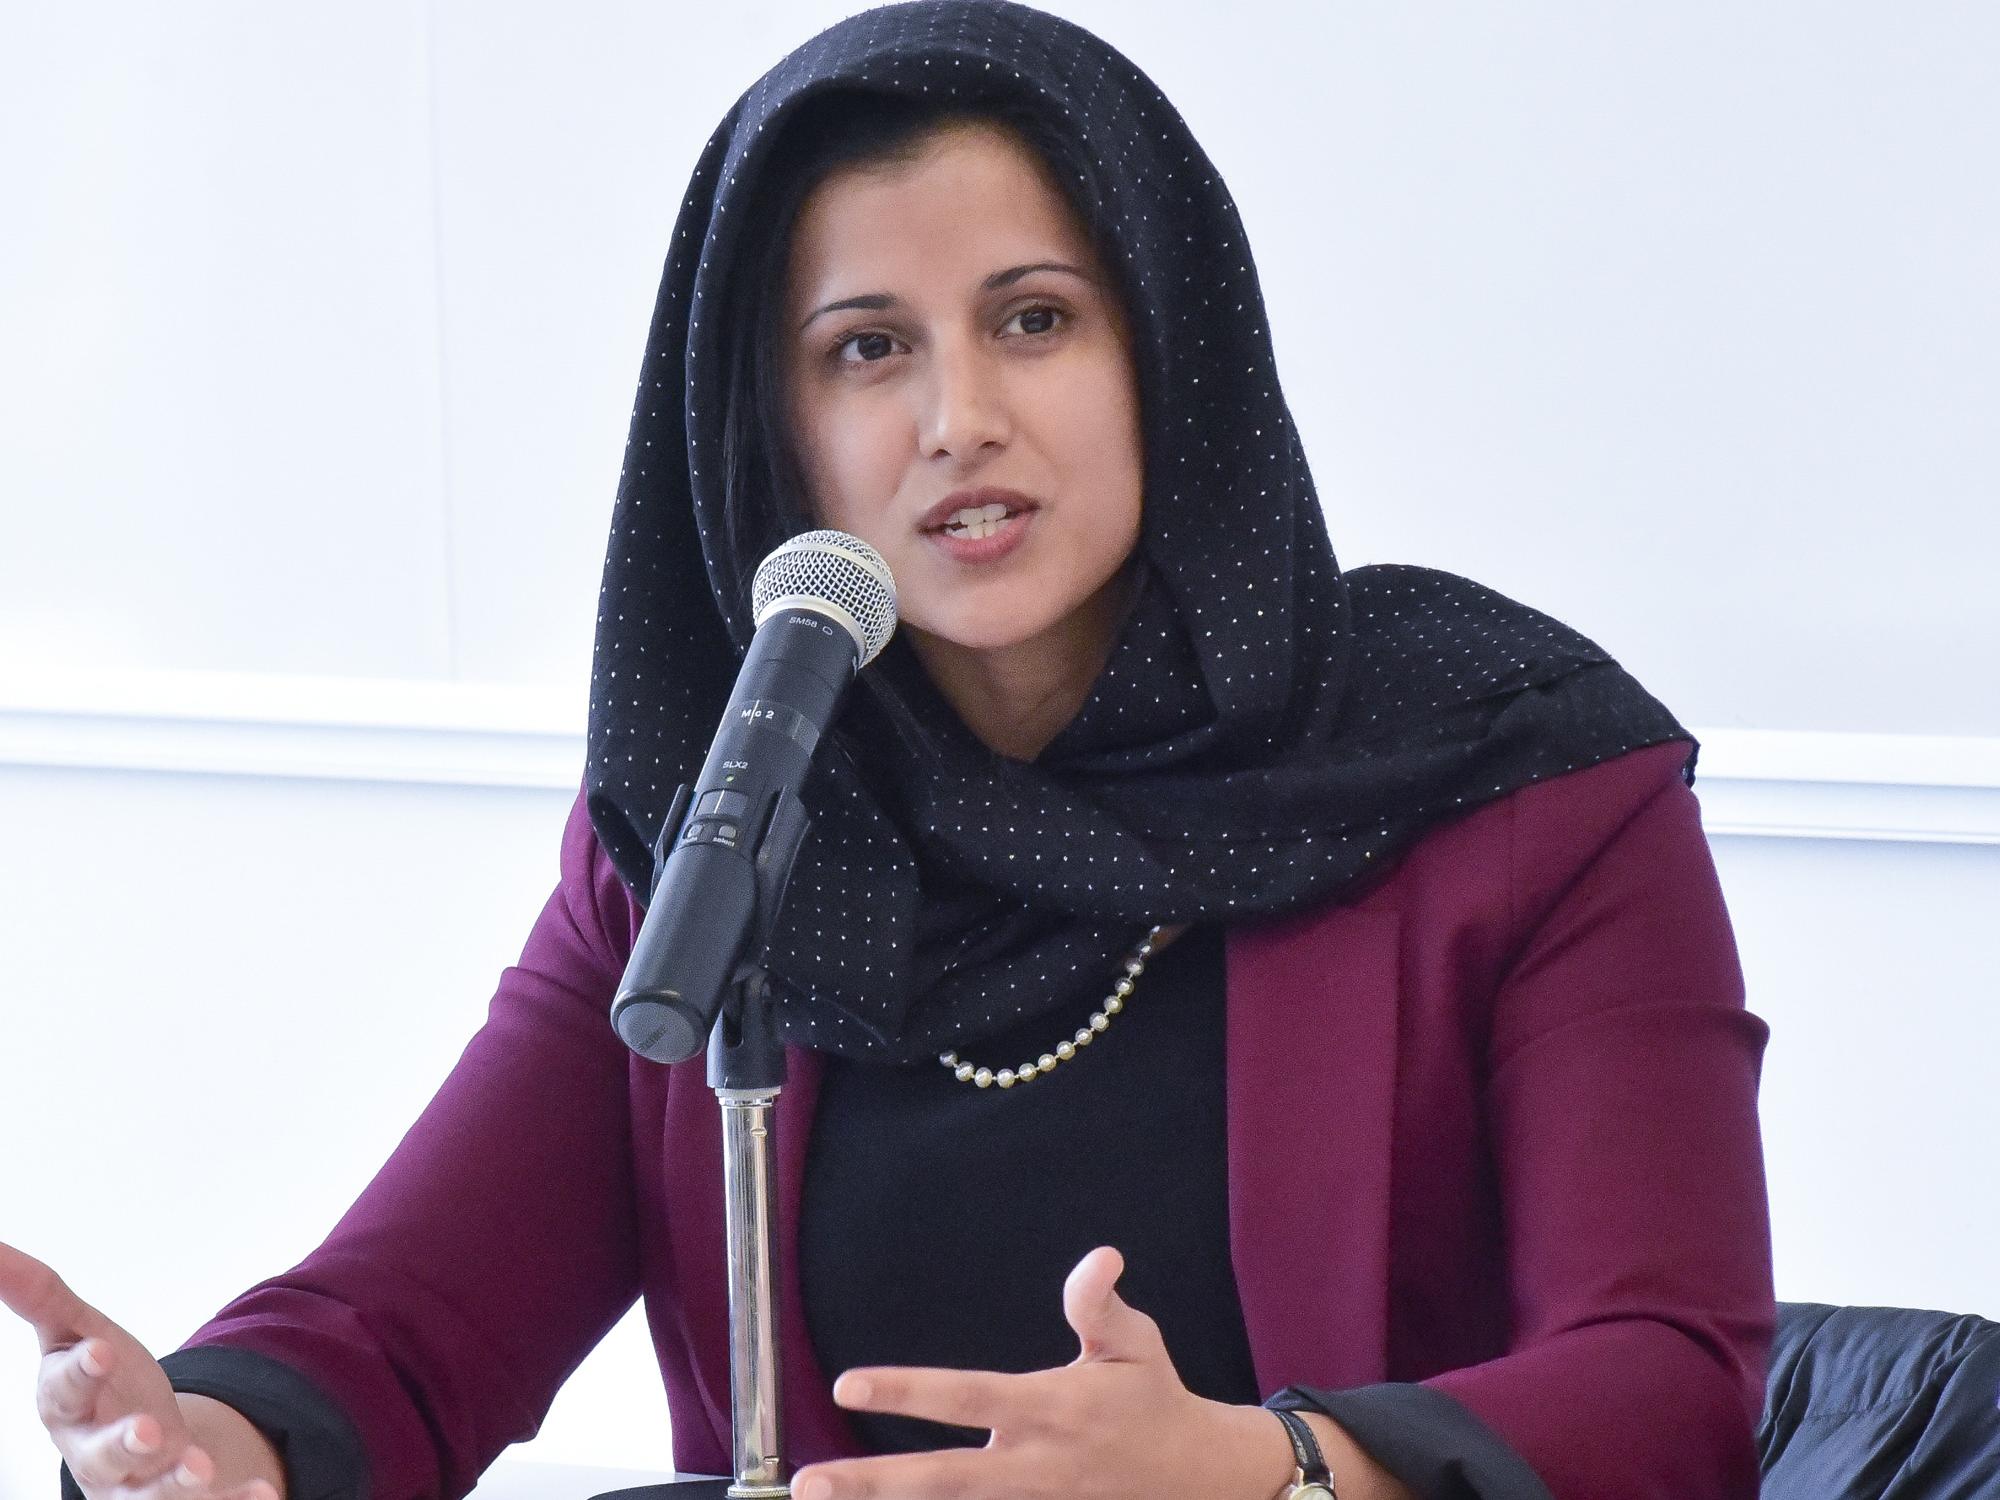 Professor Aisha Ahmad has been awarded the ISA Emerging Scholar award